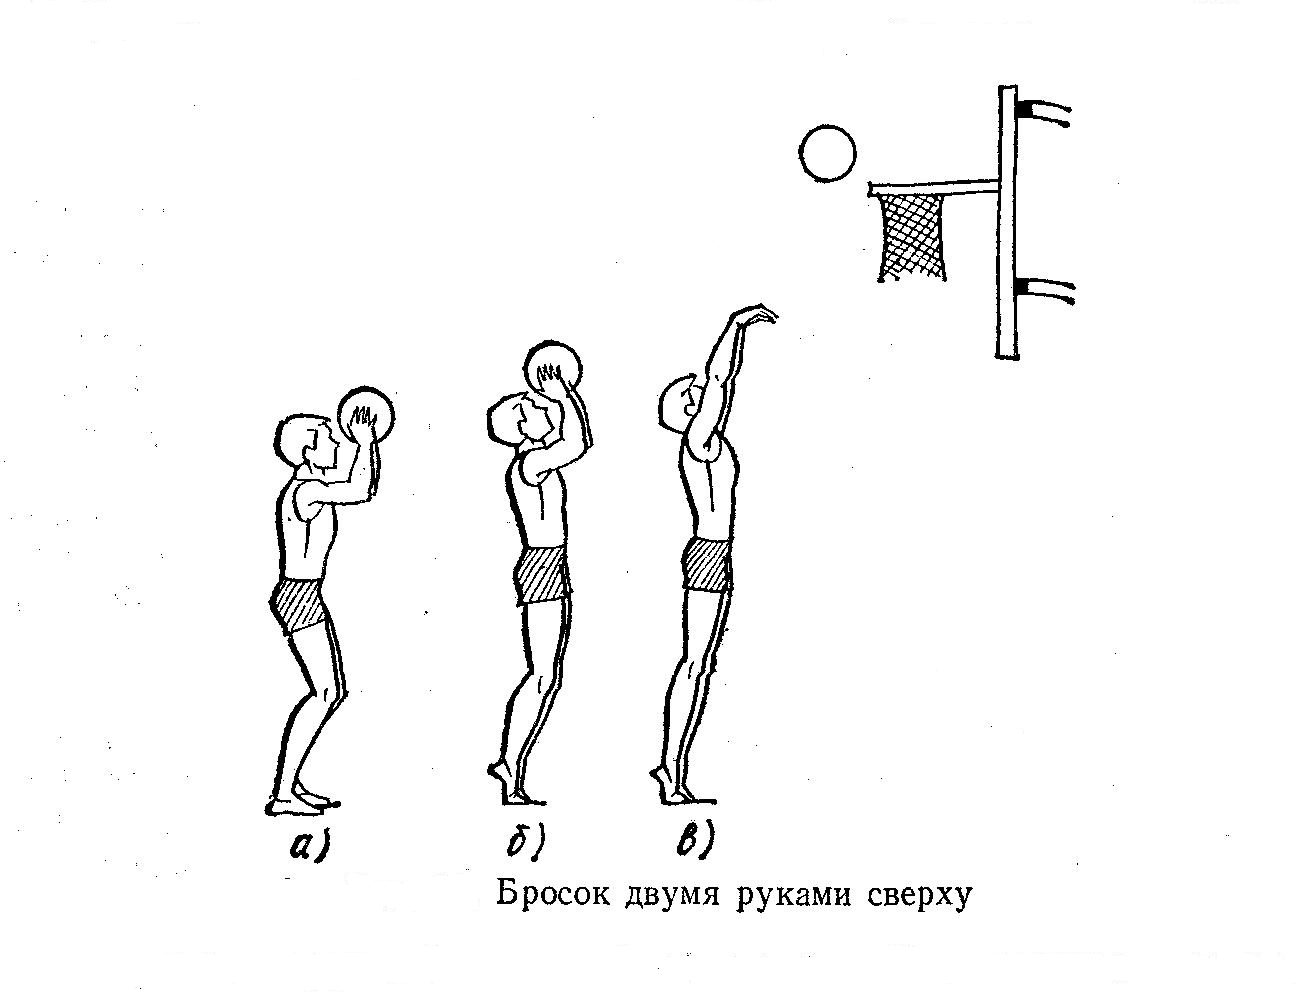 Броски снизу. Бросок мяча методом снизу. Бросок мяча в баскетболе снизу. Техника броска мяча двумя руками сверху в баскетболе. Бросок двумя руками сверху в баскетболе.